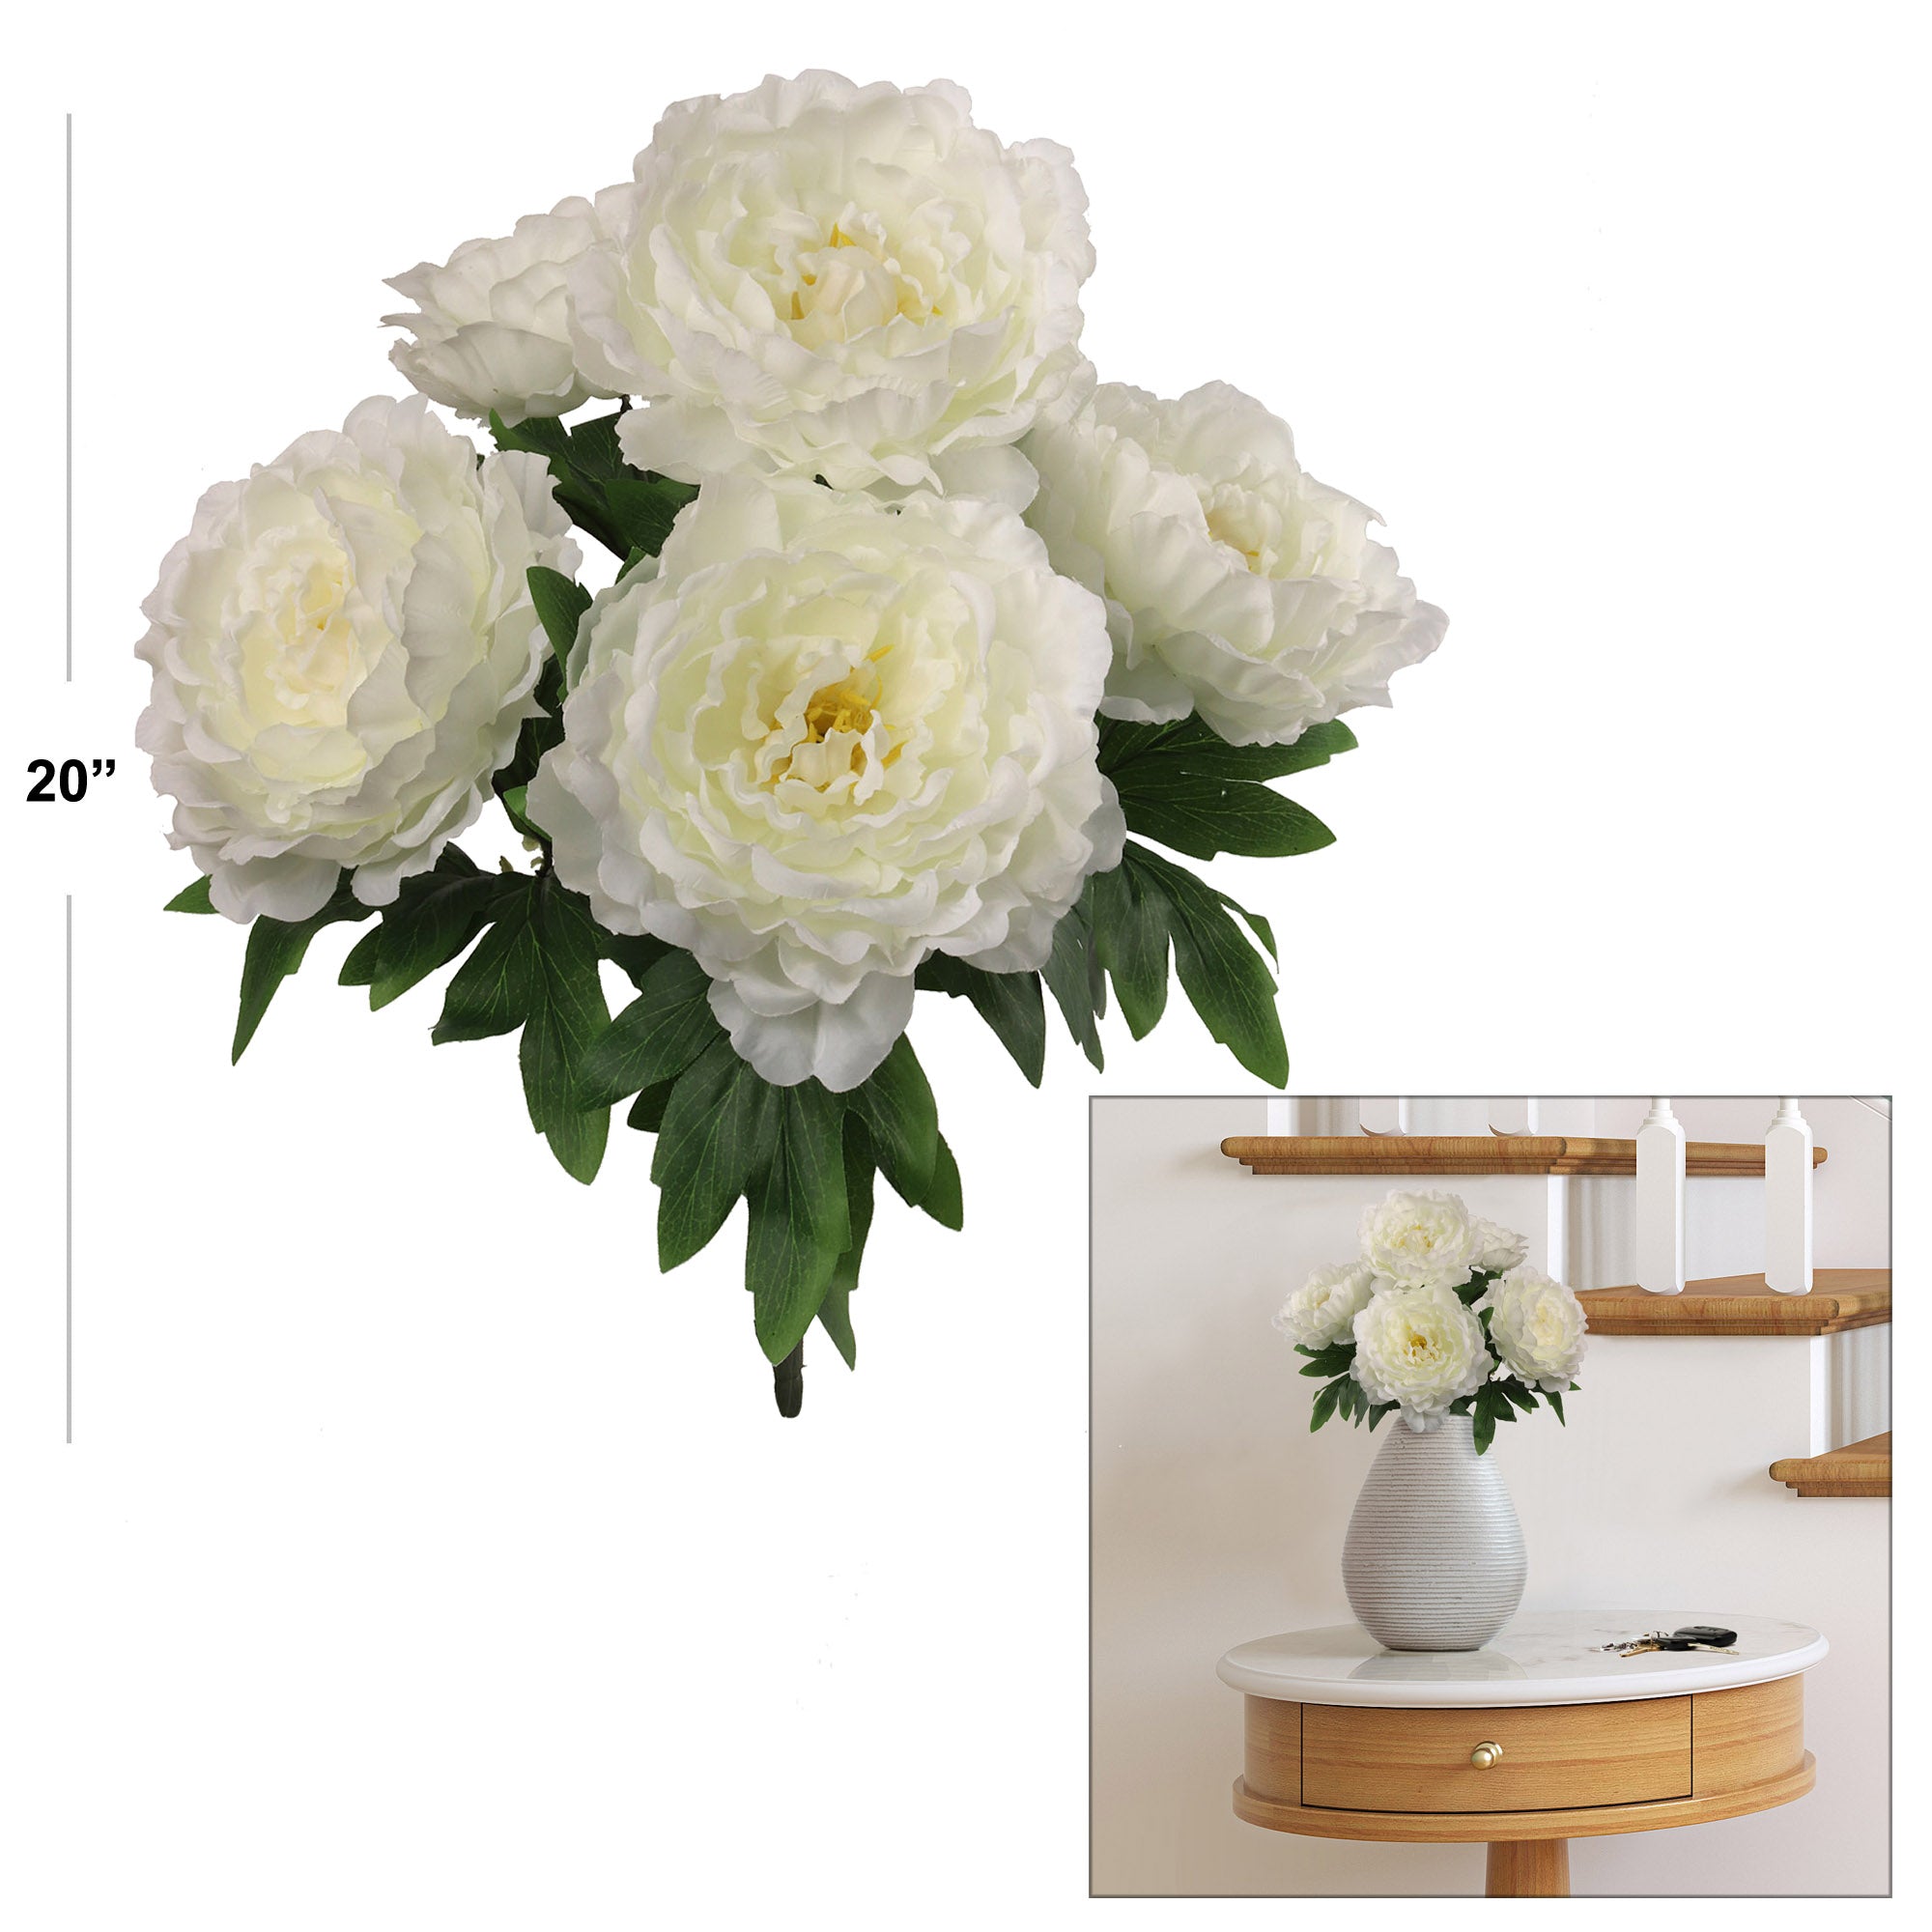 Elegant 20"" White Peony Bush X5 - Artificial Flowers for Home Decor, Wedding Bouquets, and Floral Arrangements